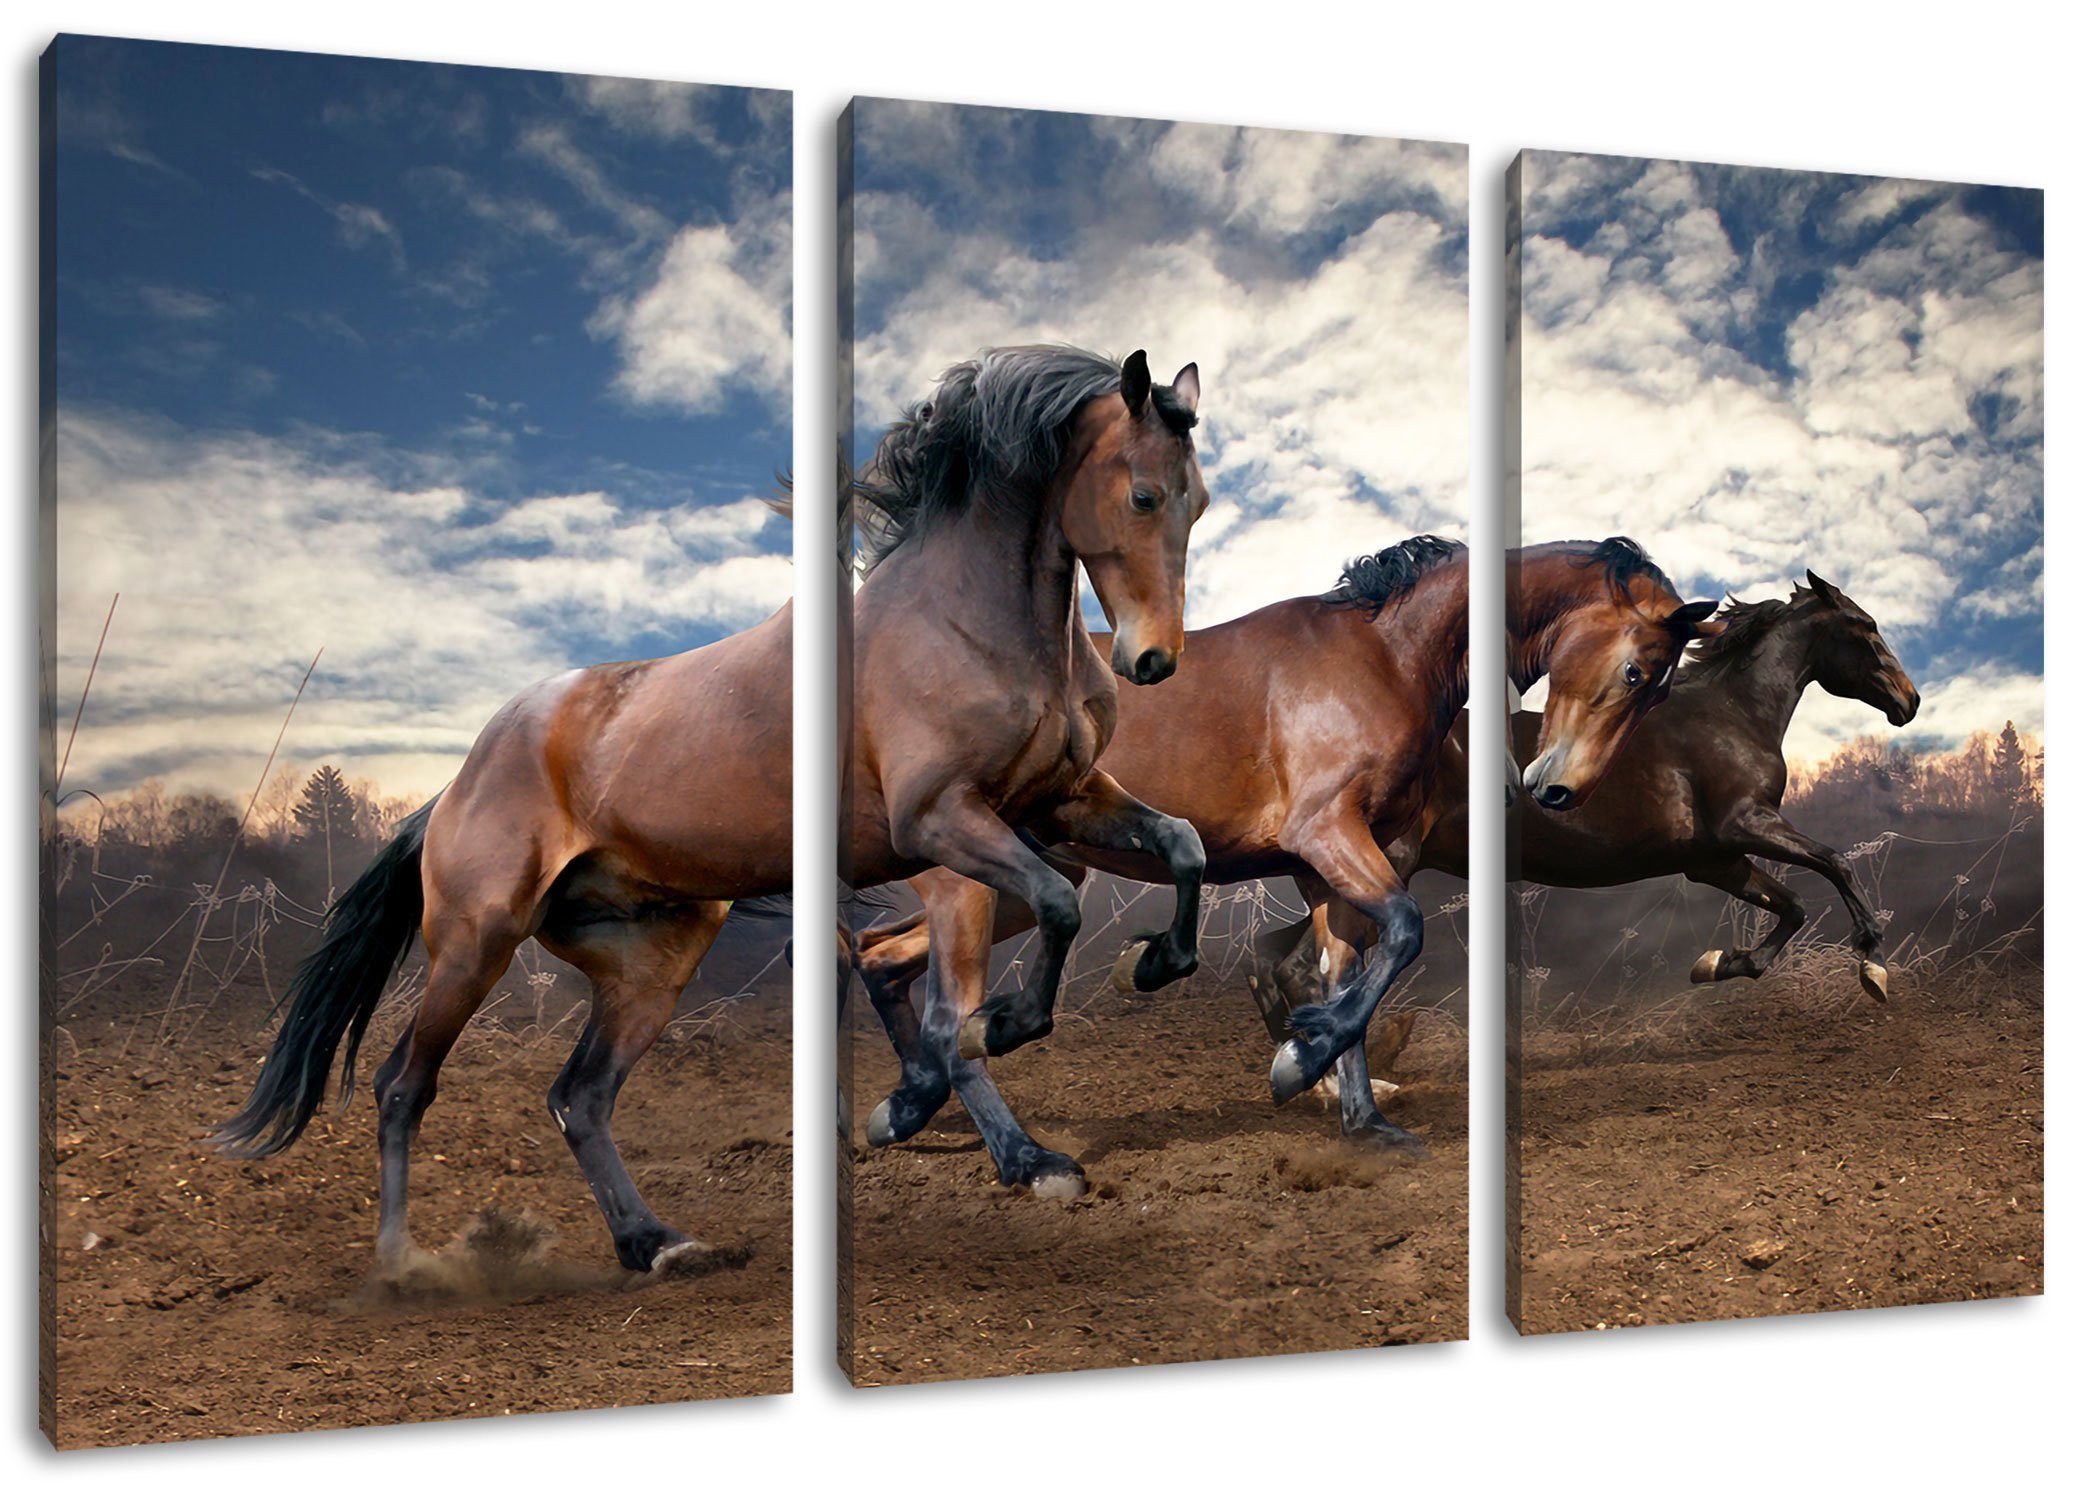 Pixxprint Leinwandbild Wilde freie Pferde, Wilde freie Pferde 3Teiler (120x80cm) (1 St), Leinwandbild fertig bespannt, inkl. Zackenaufhänger